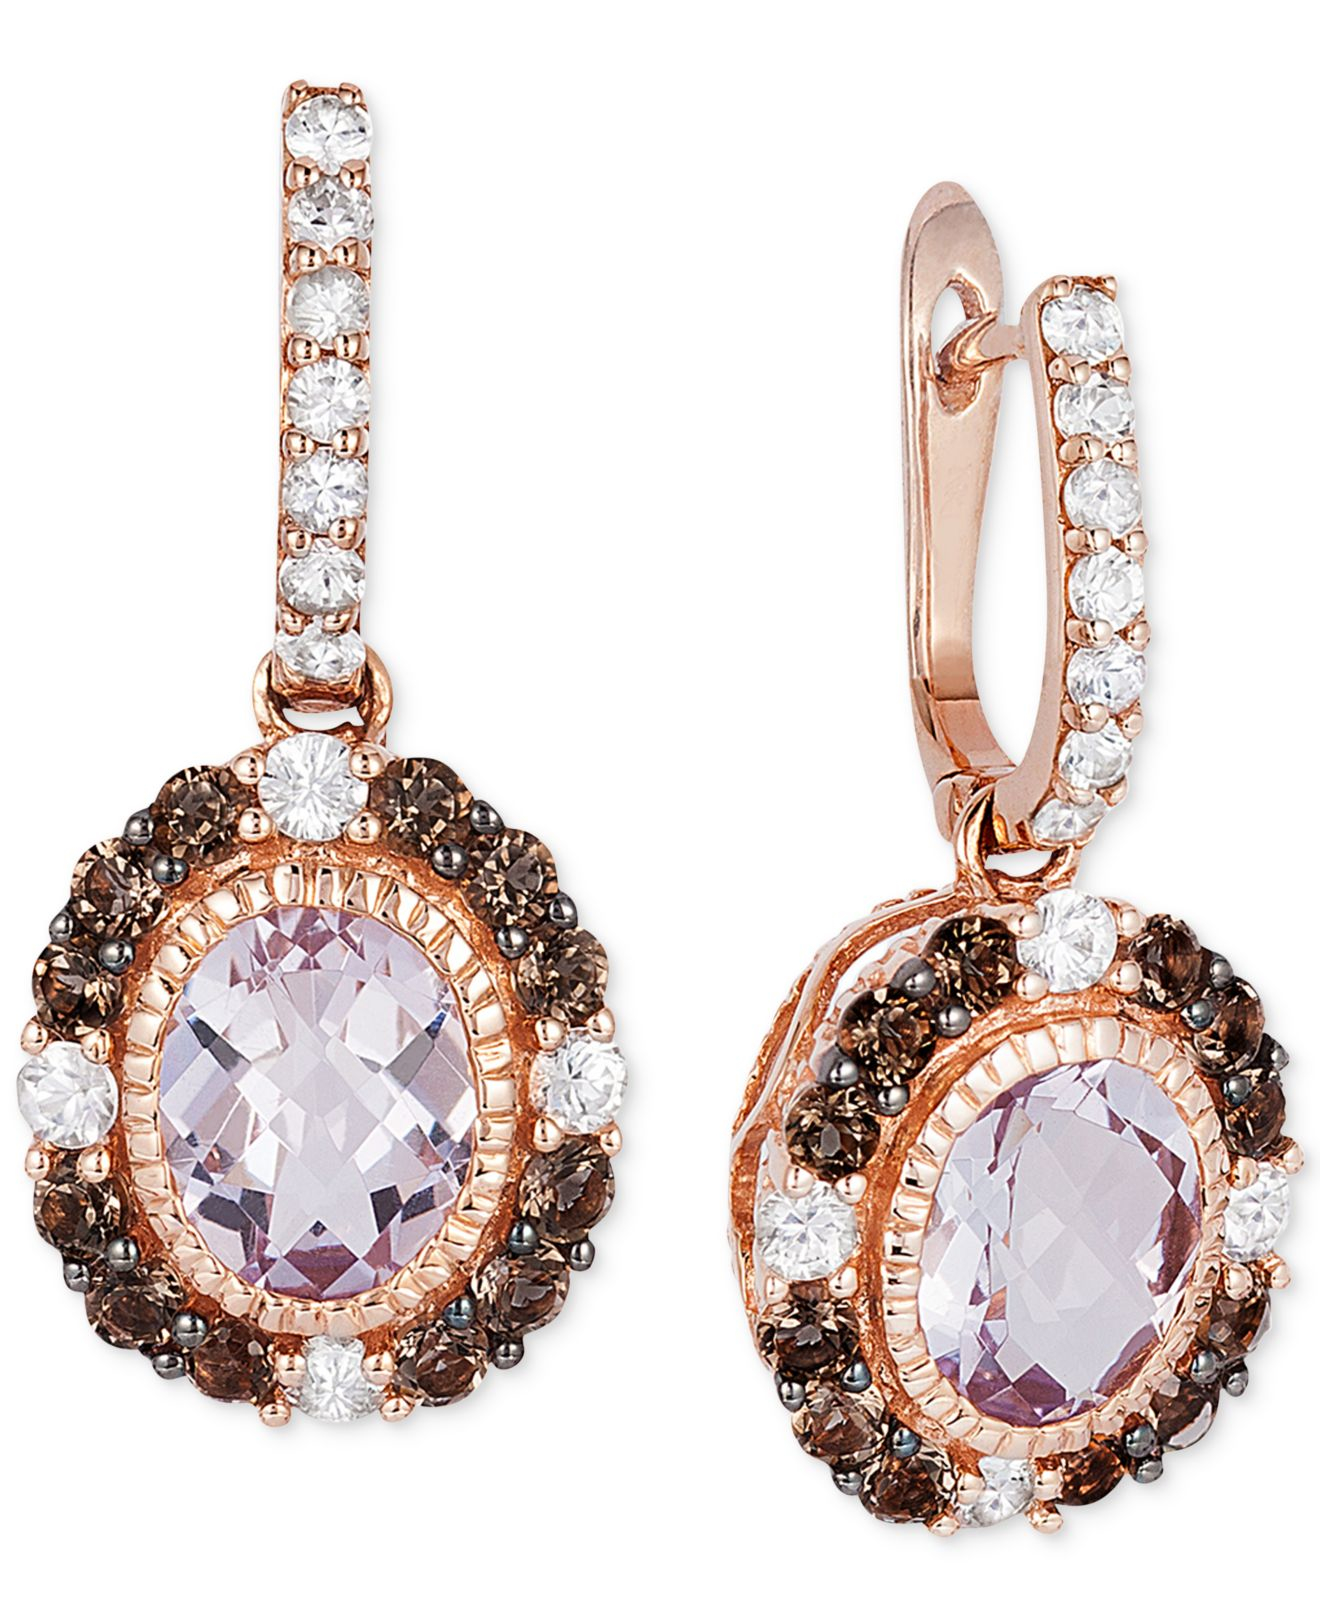 Le Vian Multi R Multi Stone 2 34 Ct Tw Drop Earrings In 14k Rose Gold Multicolor Product 0 508432137 Normal 